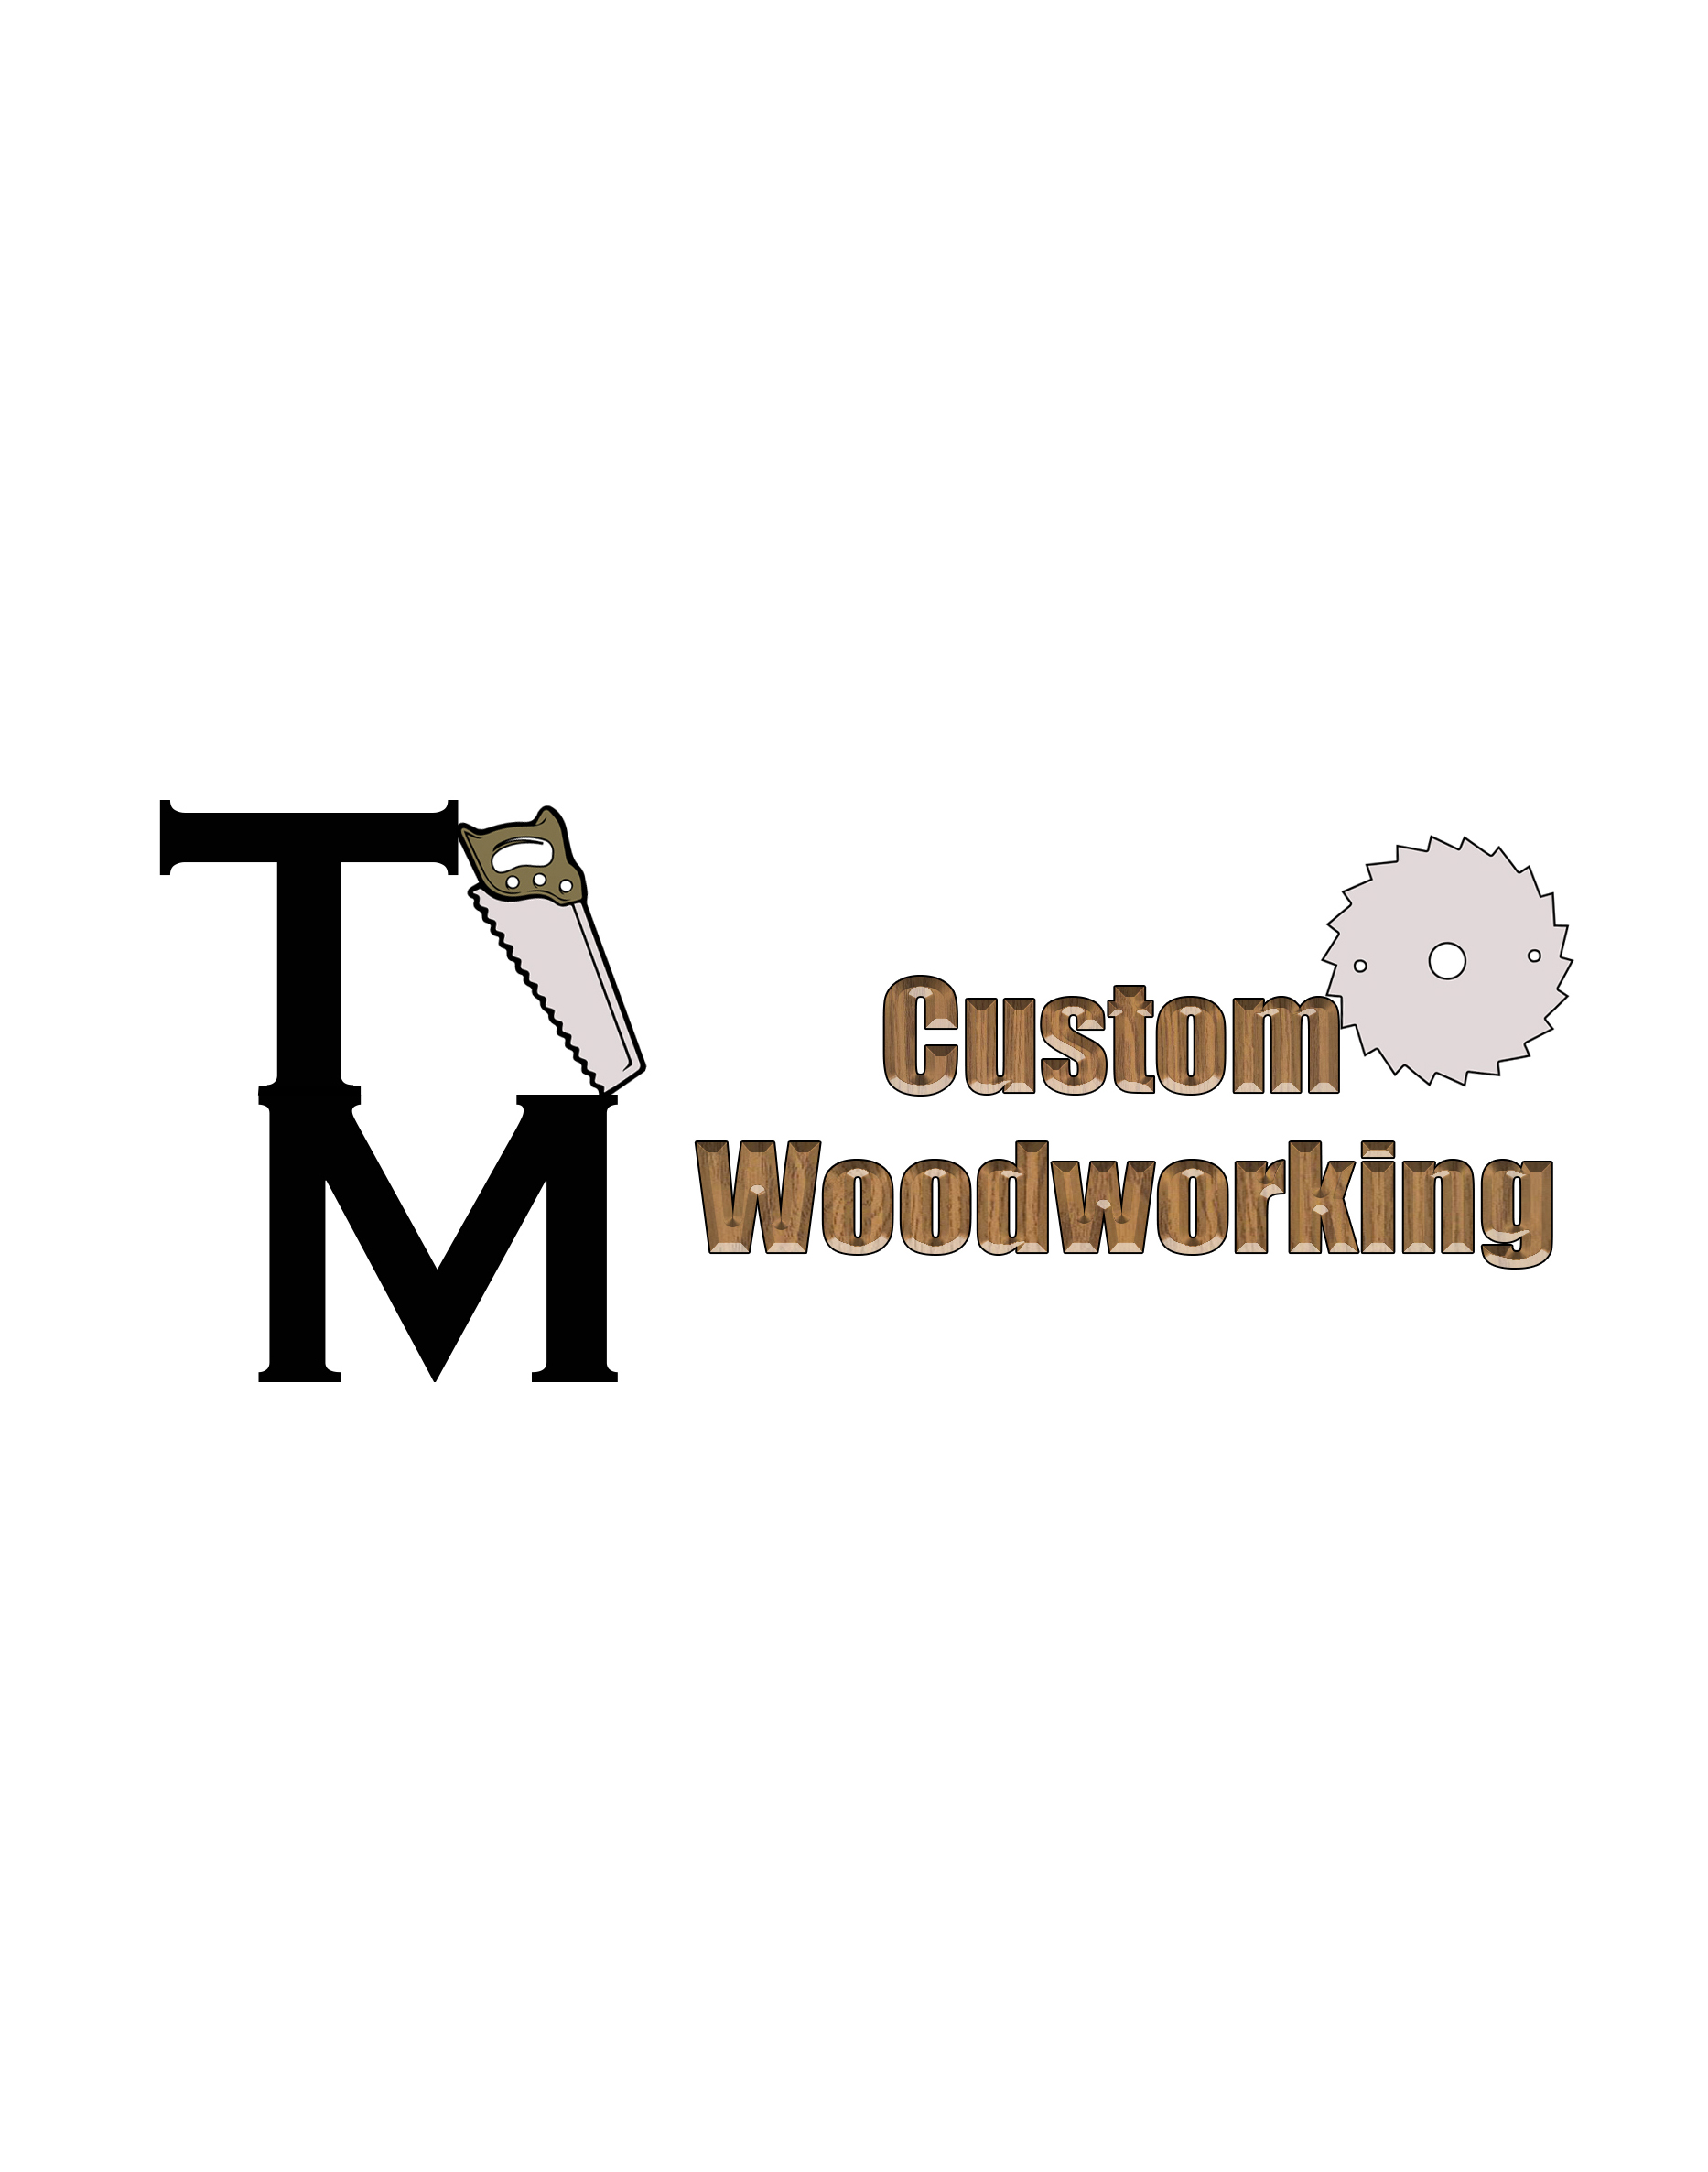 Custom Woodworking Graphic Art Logo Image